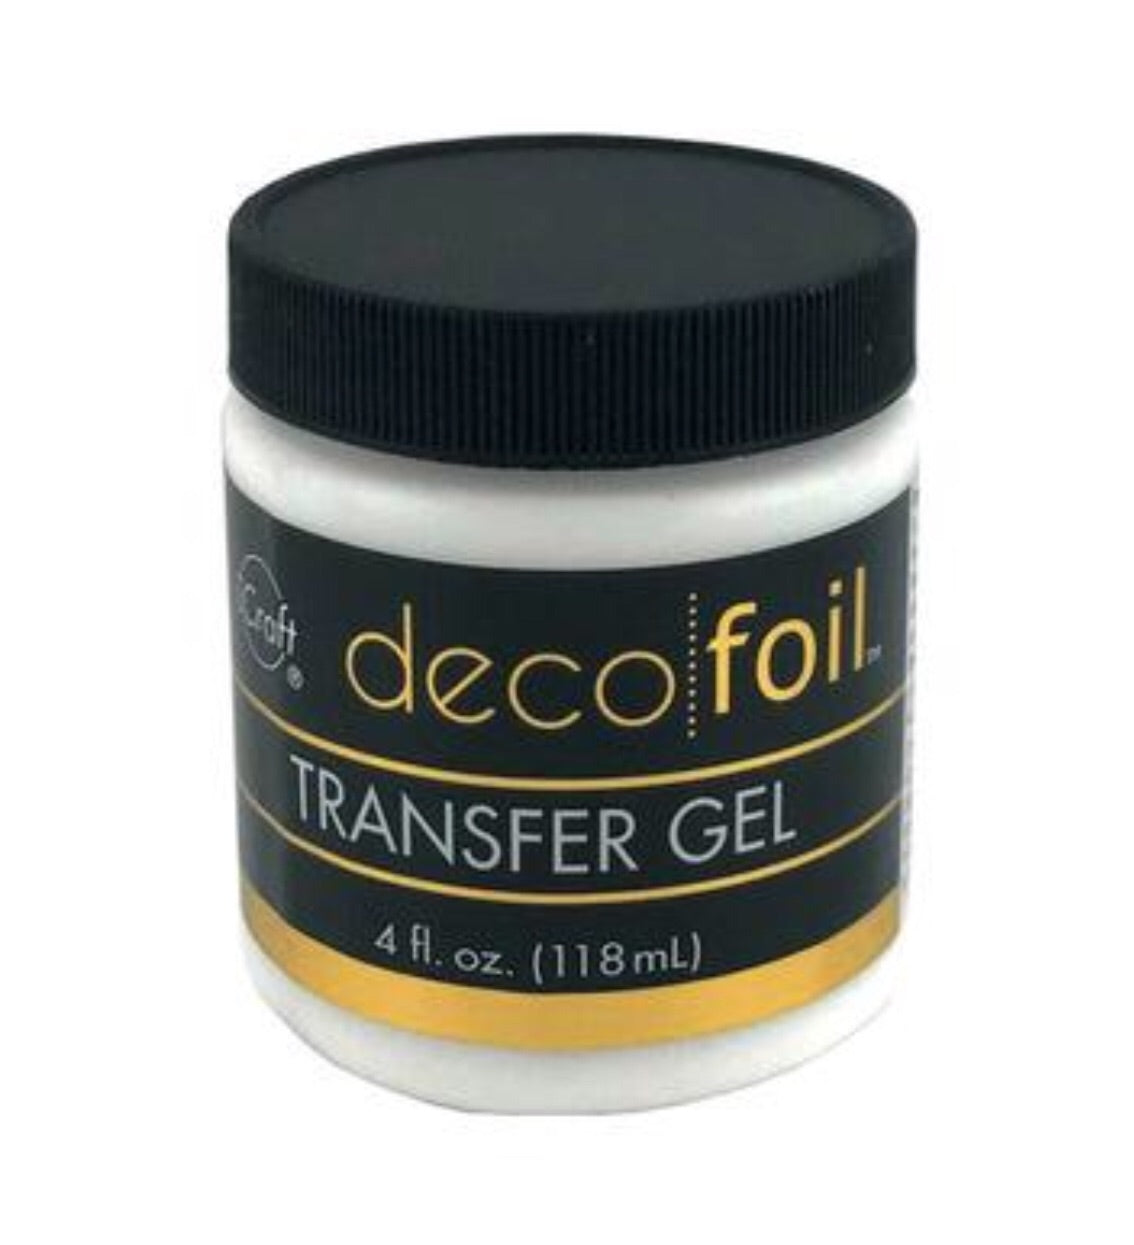 Deco Foil Duo Transfer Gel – PAINTED studio